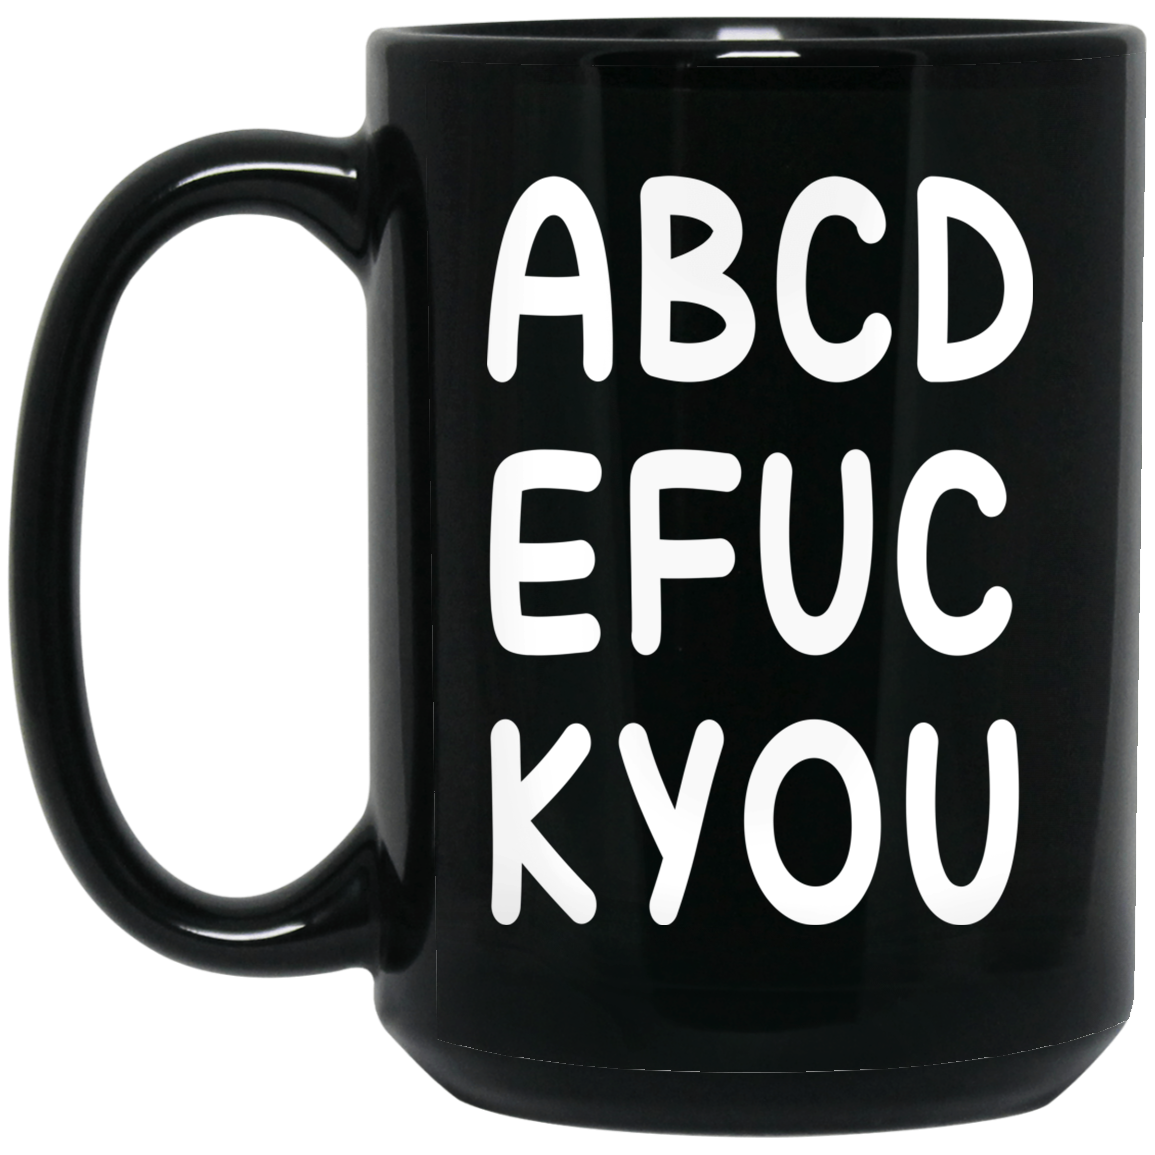 ABCD EFUC KYOU Mug